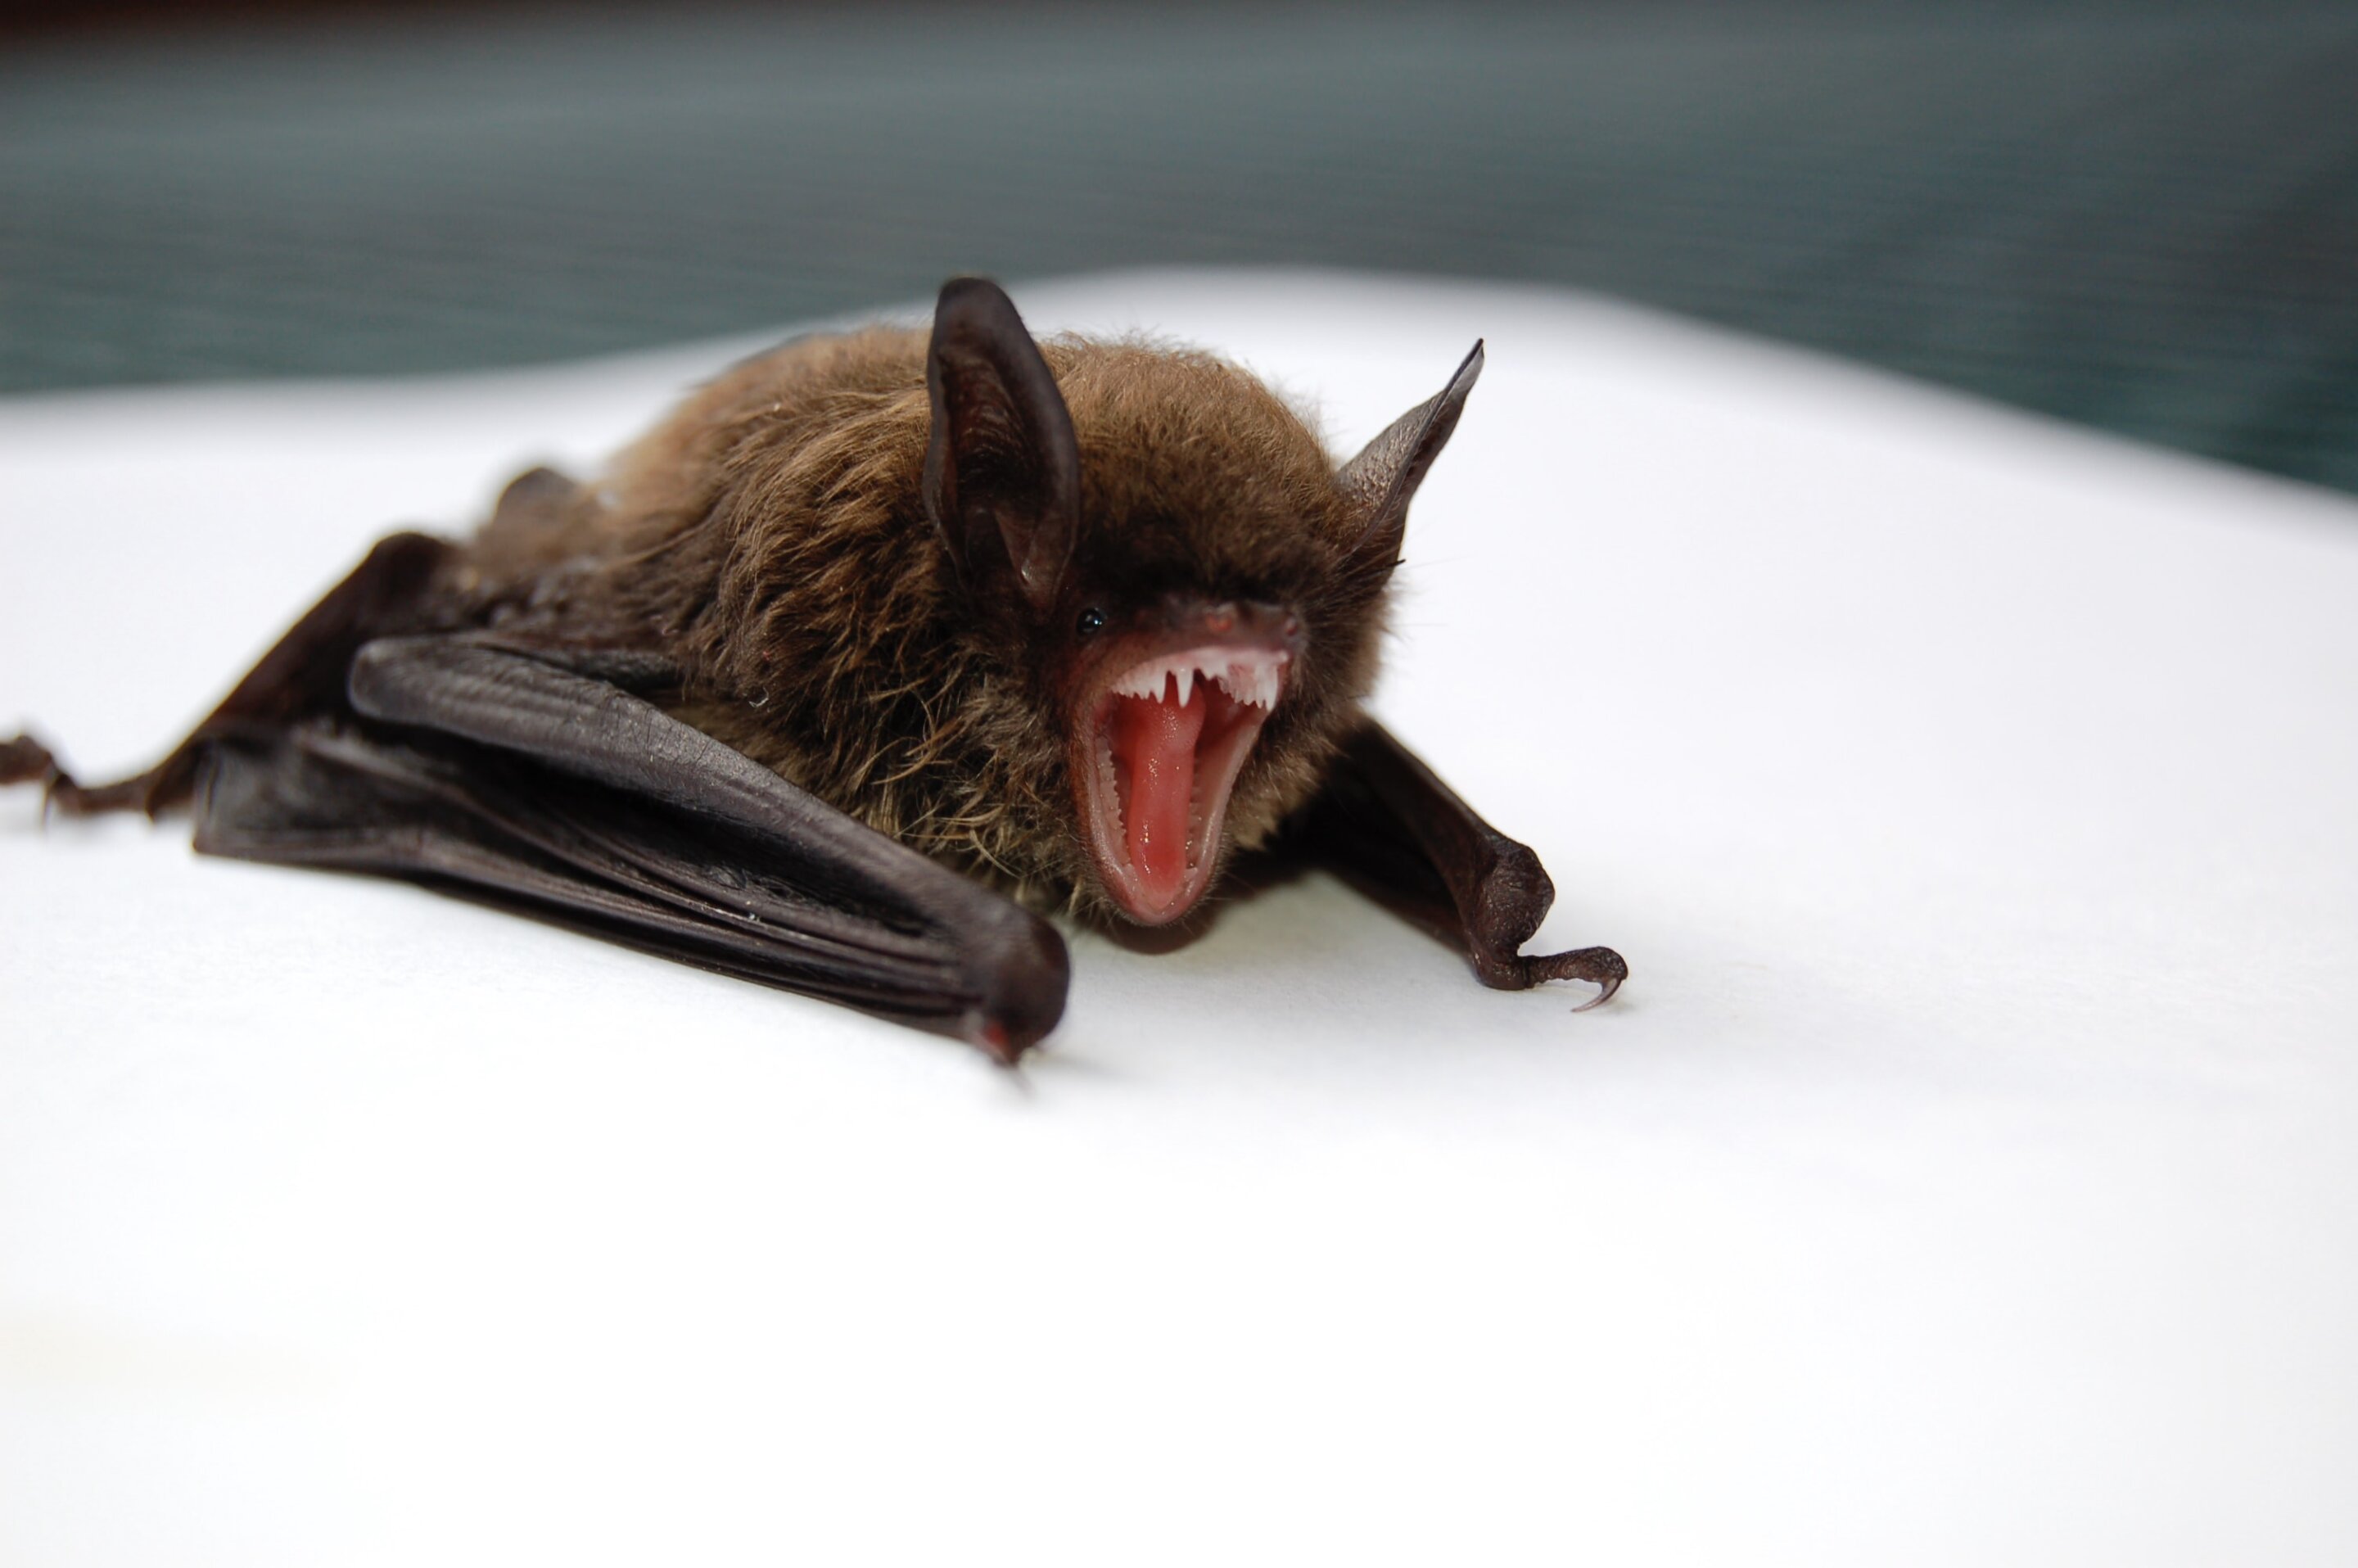 Bat with species-devastating fungus discovered in Colorado